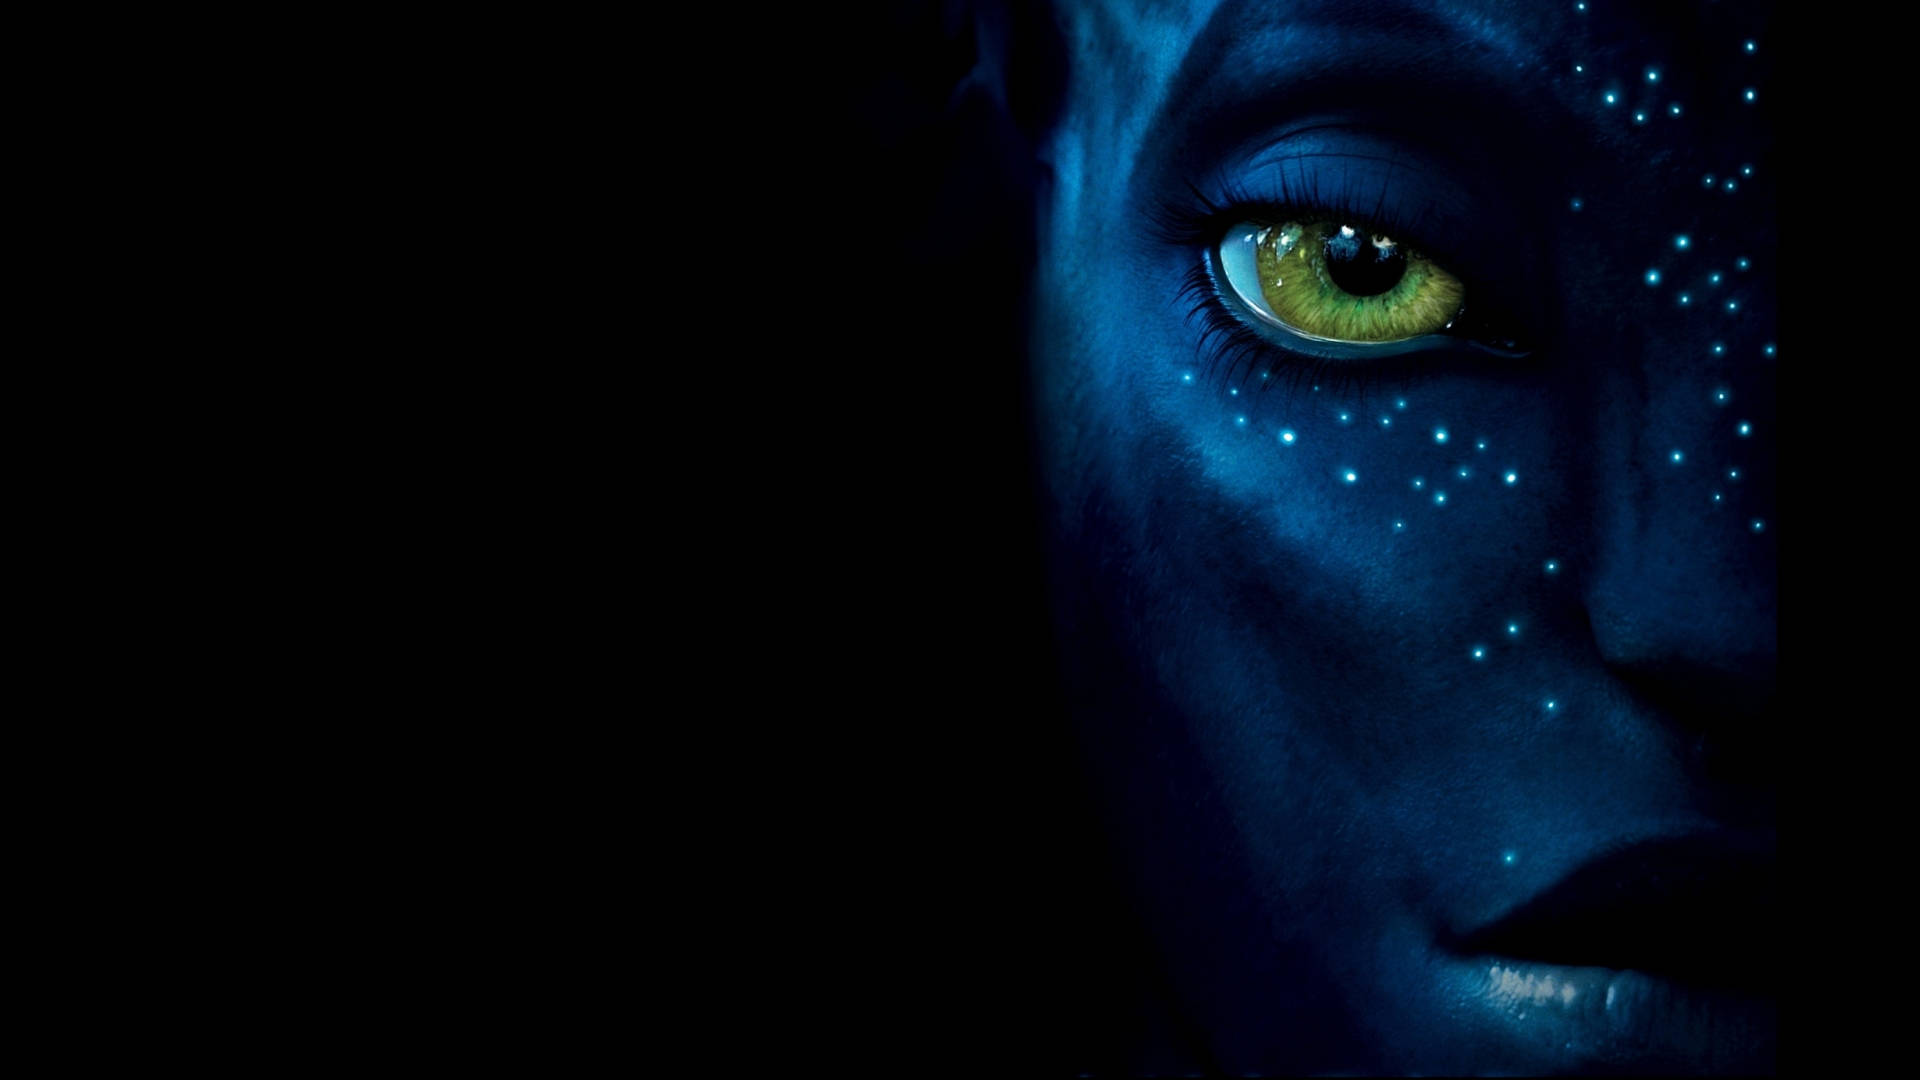 Avatar Na'vi Promotional Poster Wallpaper